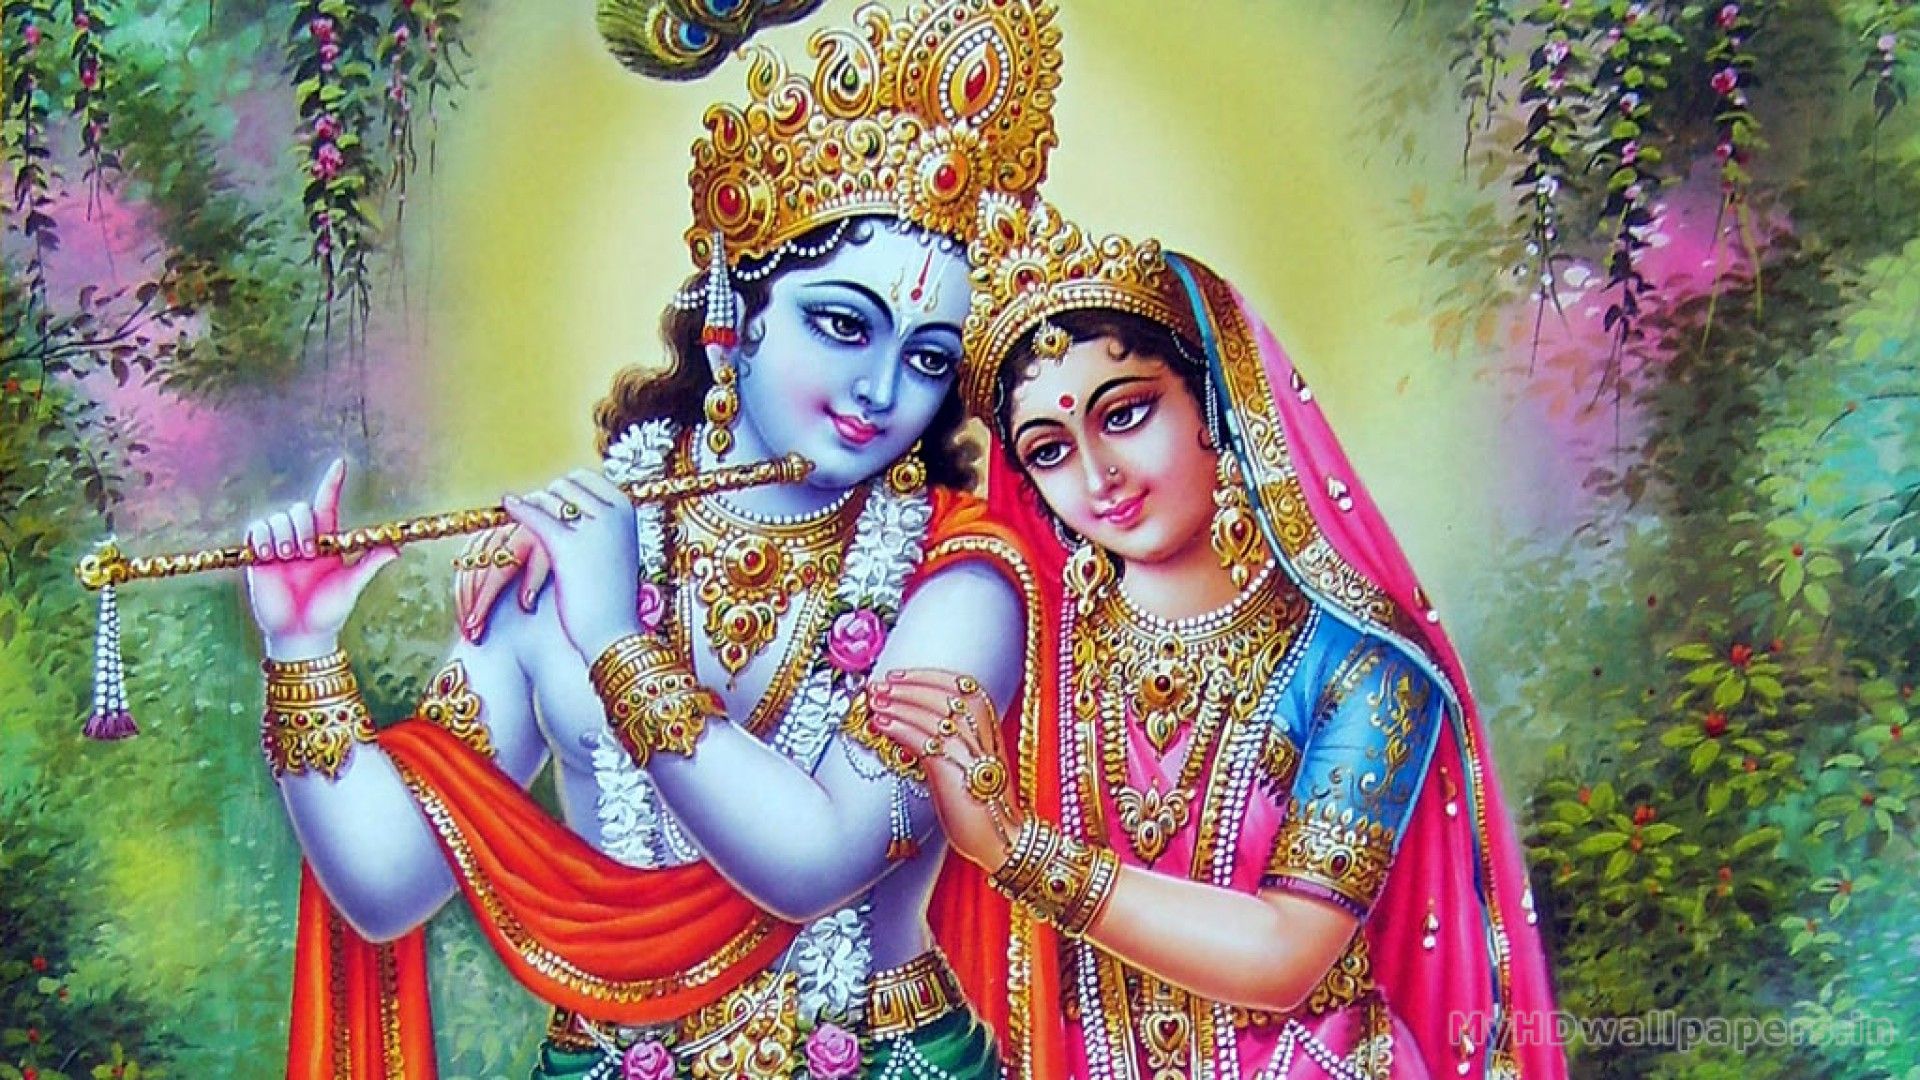 Beautiful Images Of Lord Krishna - OnlinePrasad.com blog